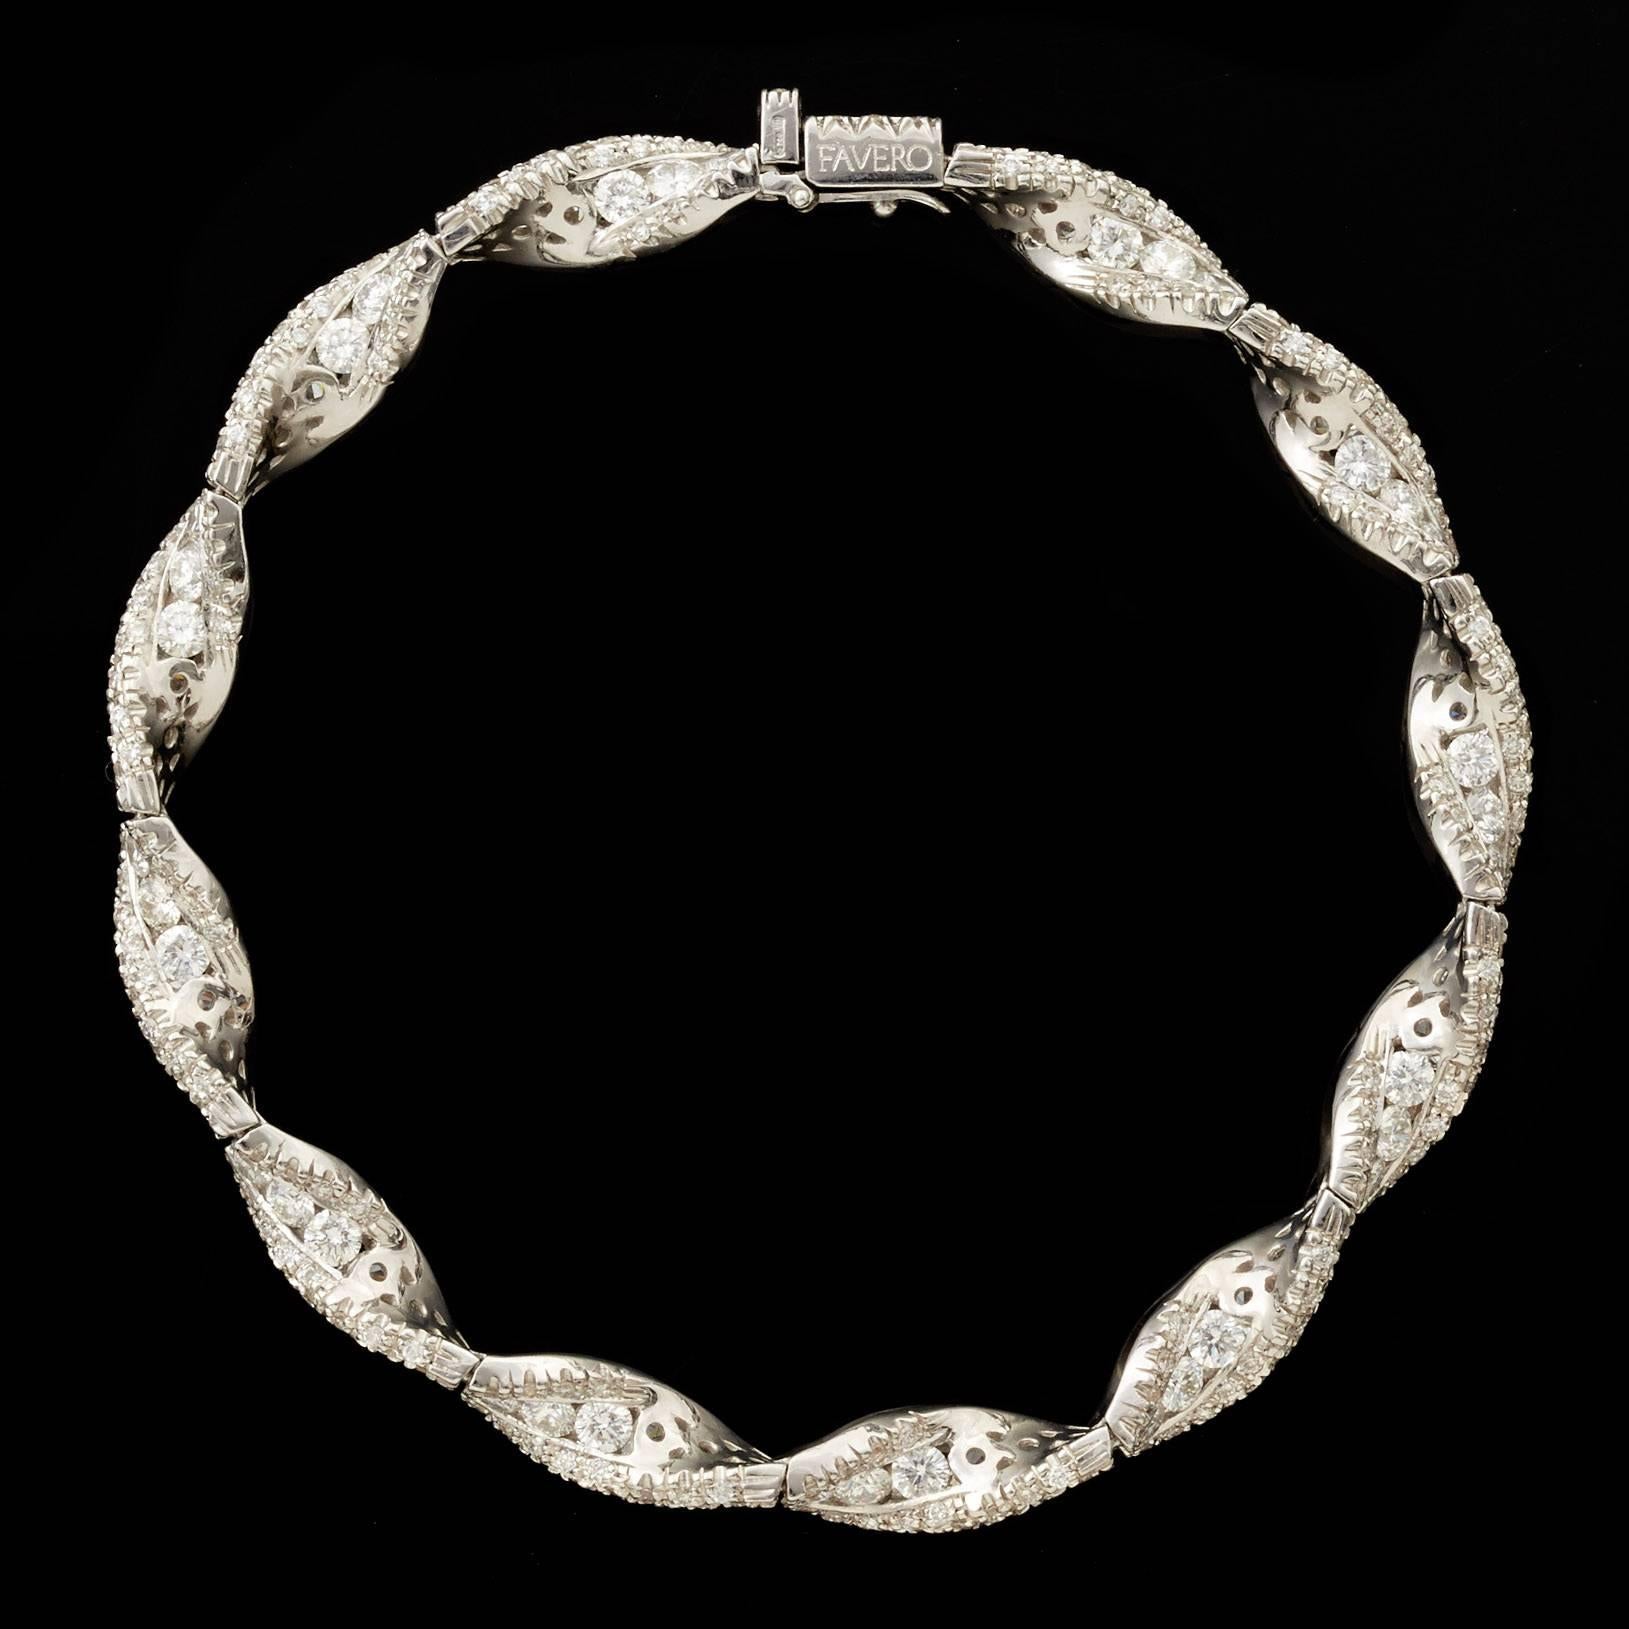 Contemporary Favero Diamond Gold Twist Bracelet